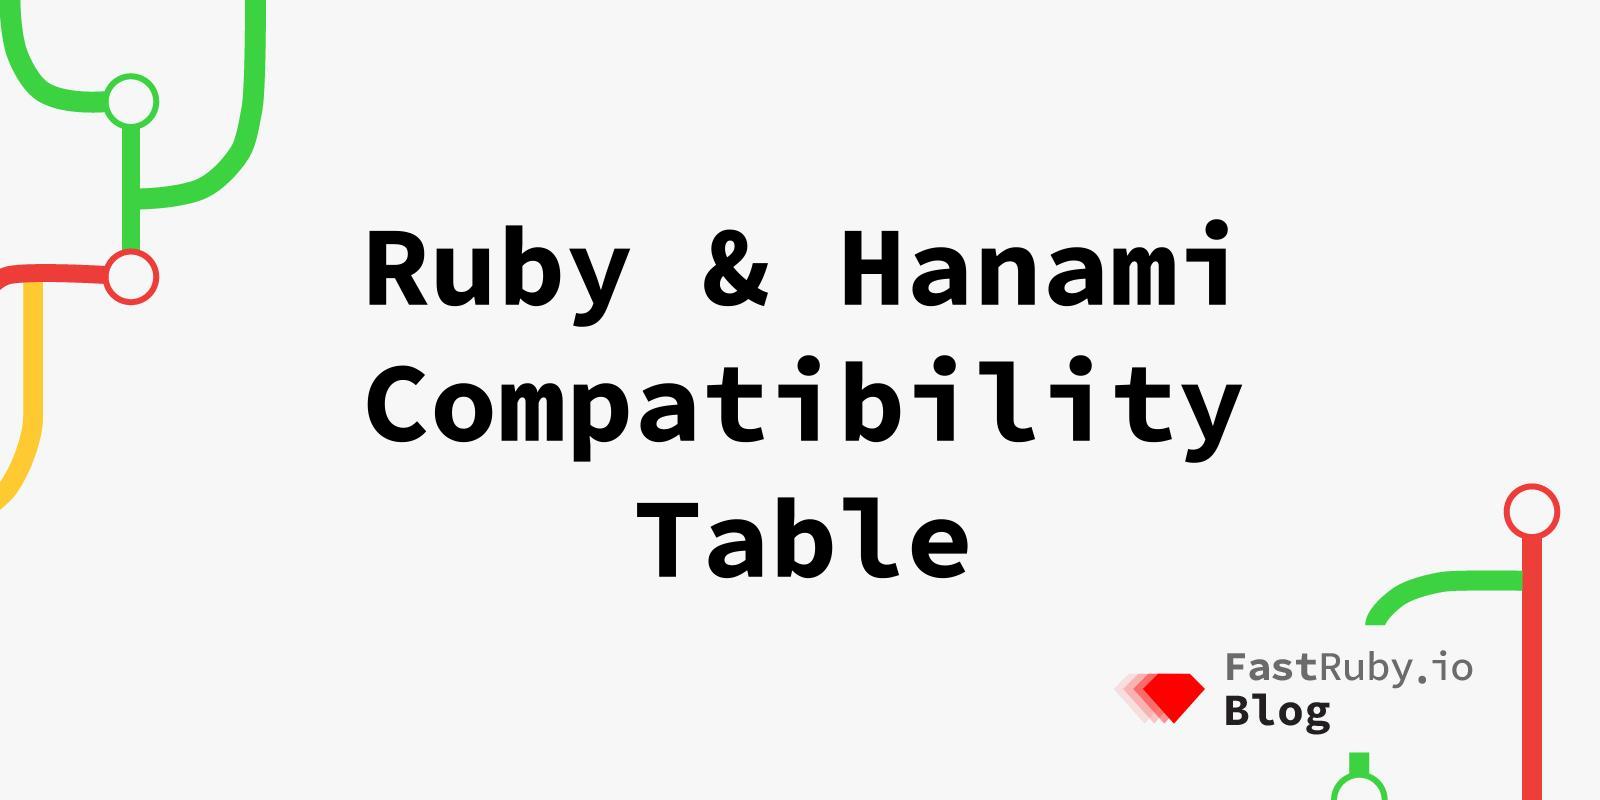 Ruby & Hanami Compatibility Table